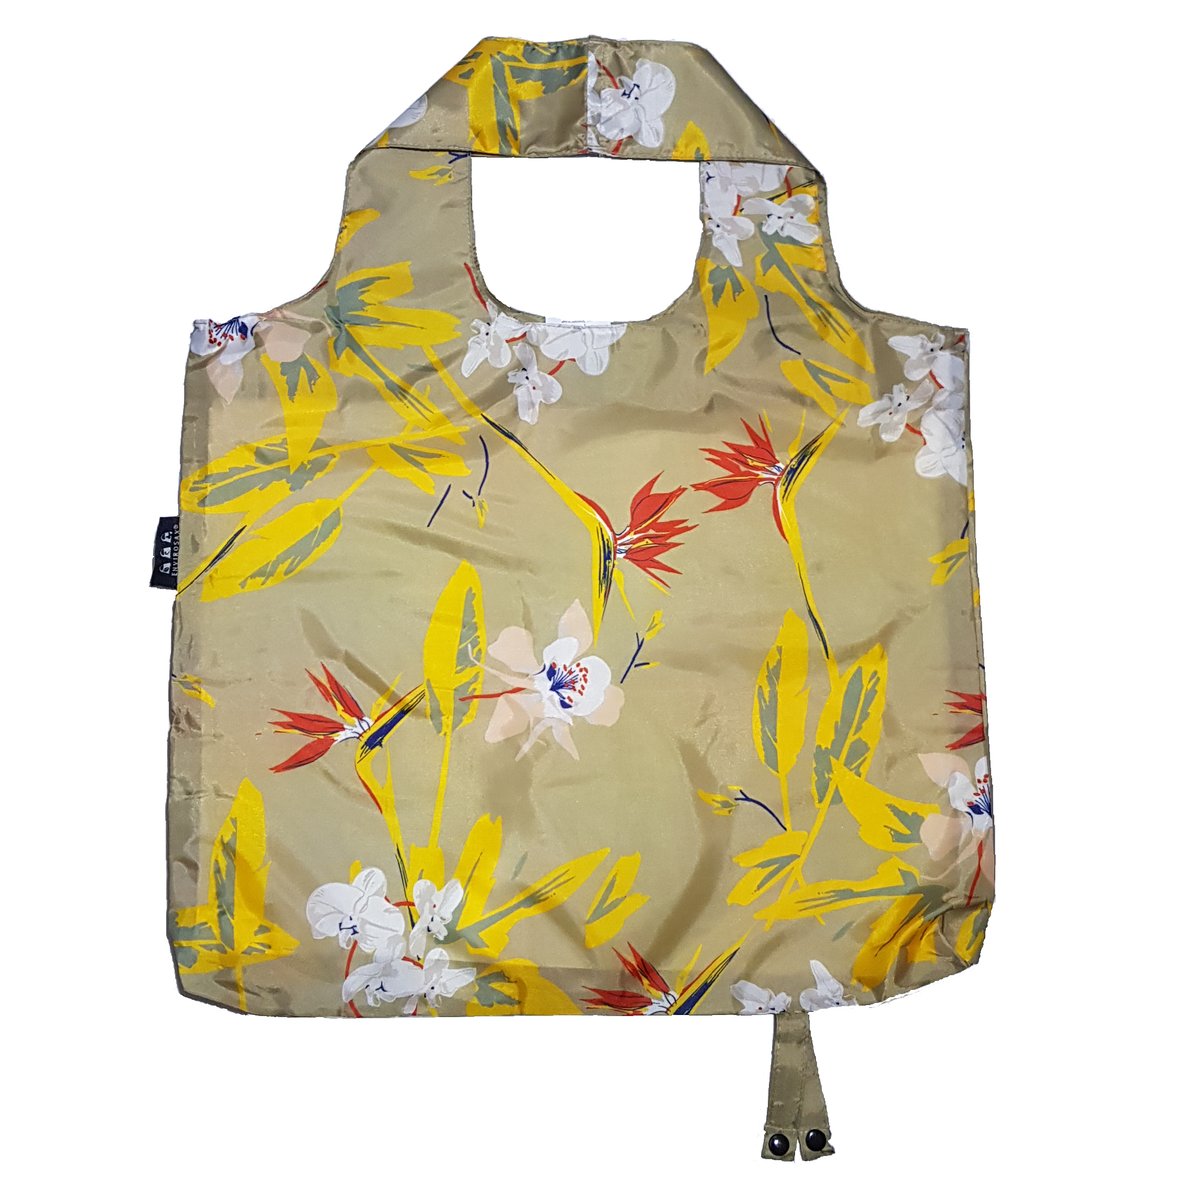 Envirosax reusable roll-up foldable shoulder shopping bag; Mai Tai bag number 4 #Envirosax #reusablebag #reuse #giftidea #birdofparadise #floral #floralbag #reusable #giftidea #tote #bag #shopping #grocery #Bbuys ebay.co.uk/itm/2714388491… via @eBay_UK